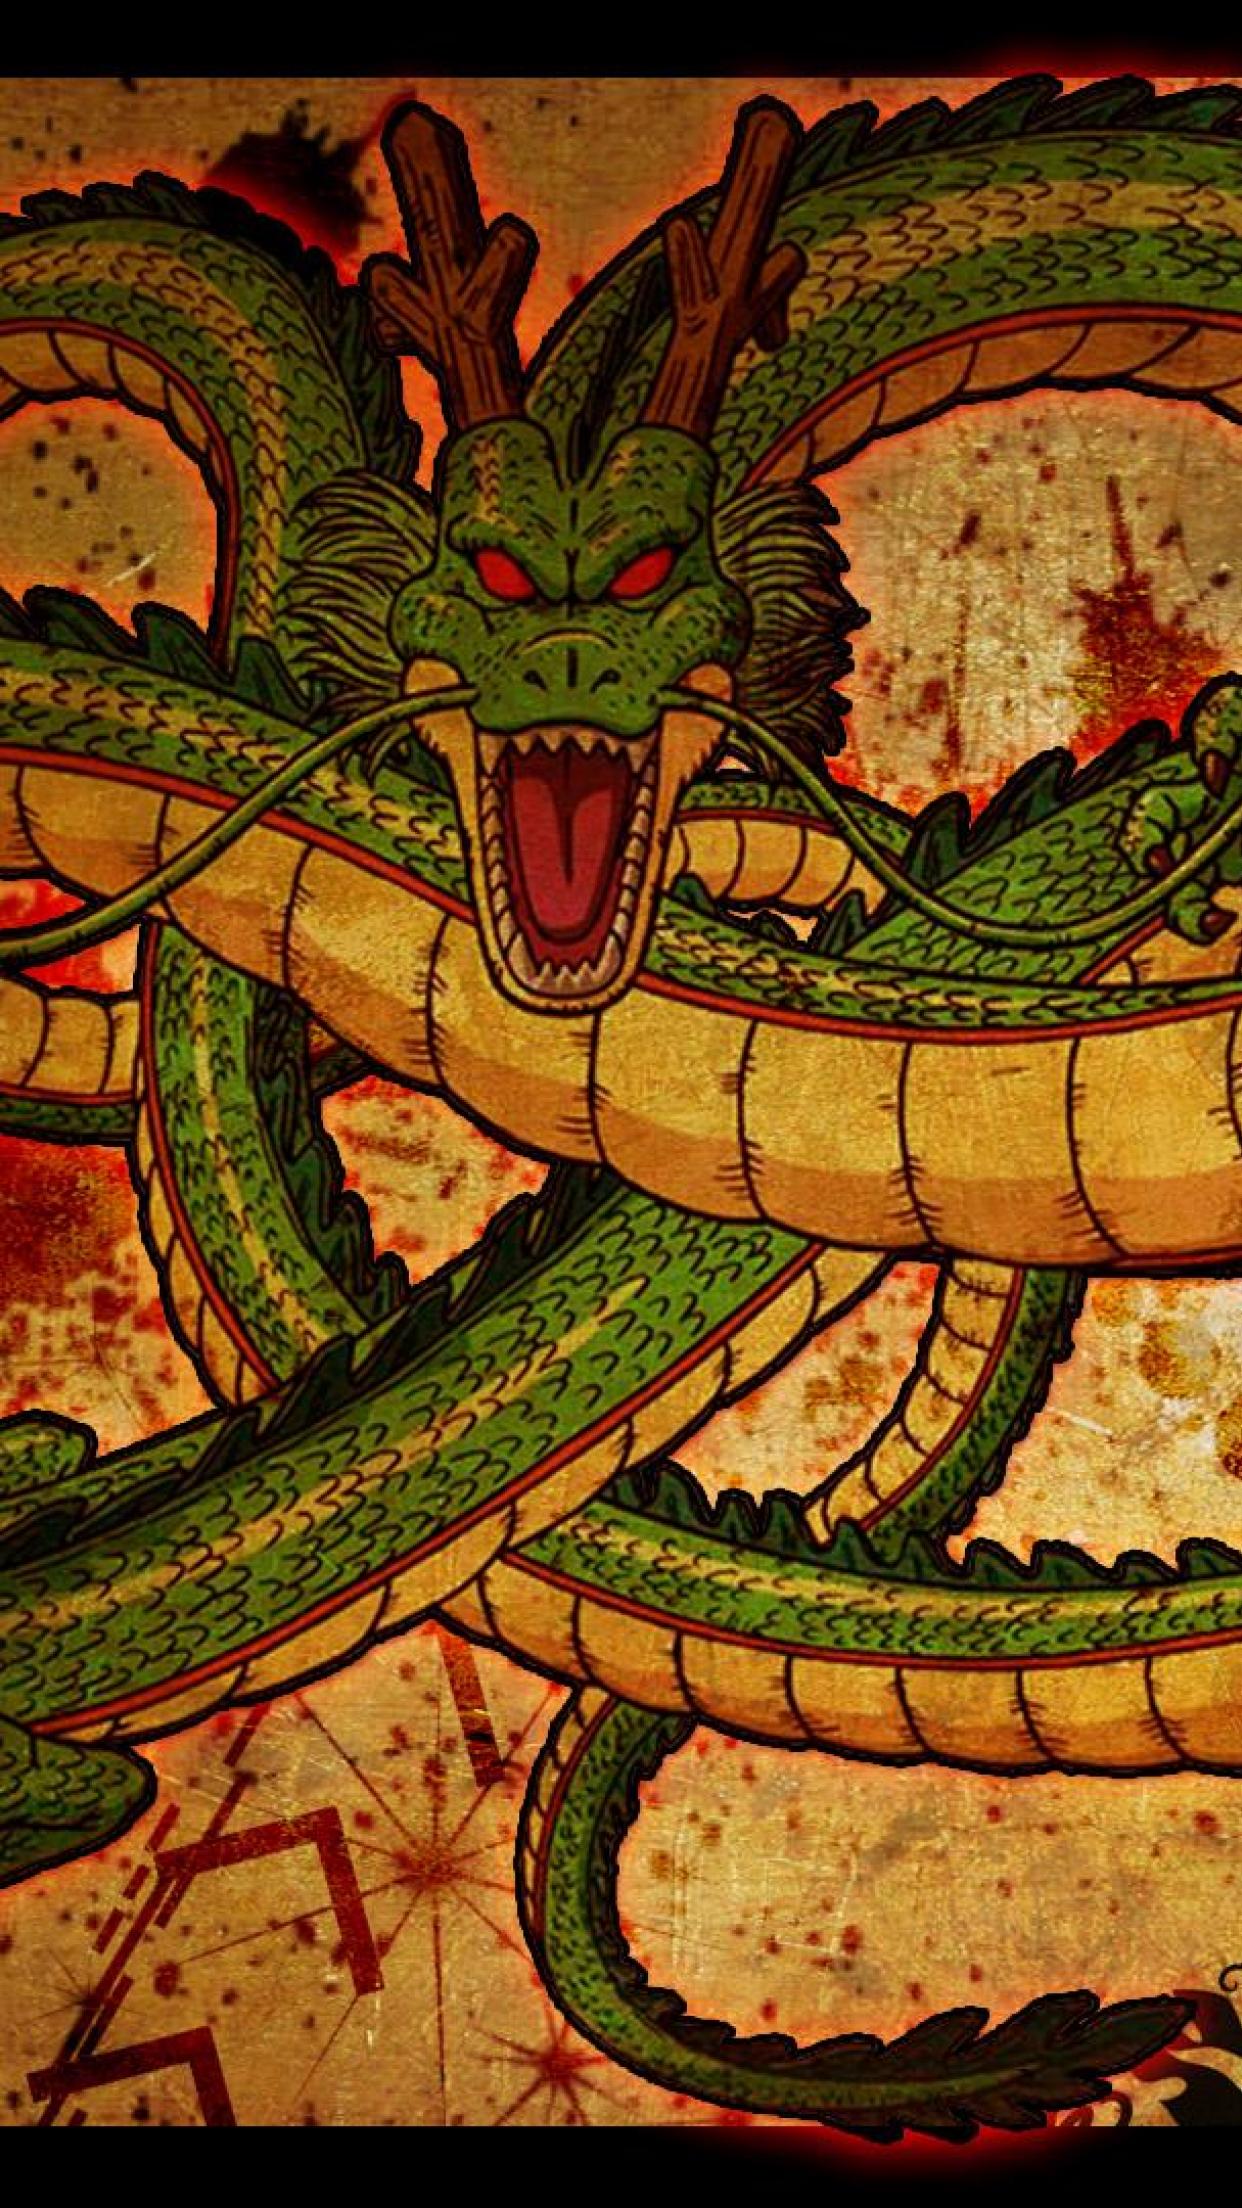 shenron wallpaper,dragon,fictional character,mythology,visual arts,art